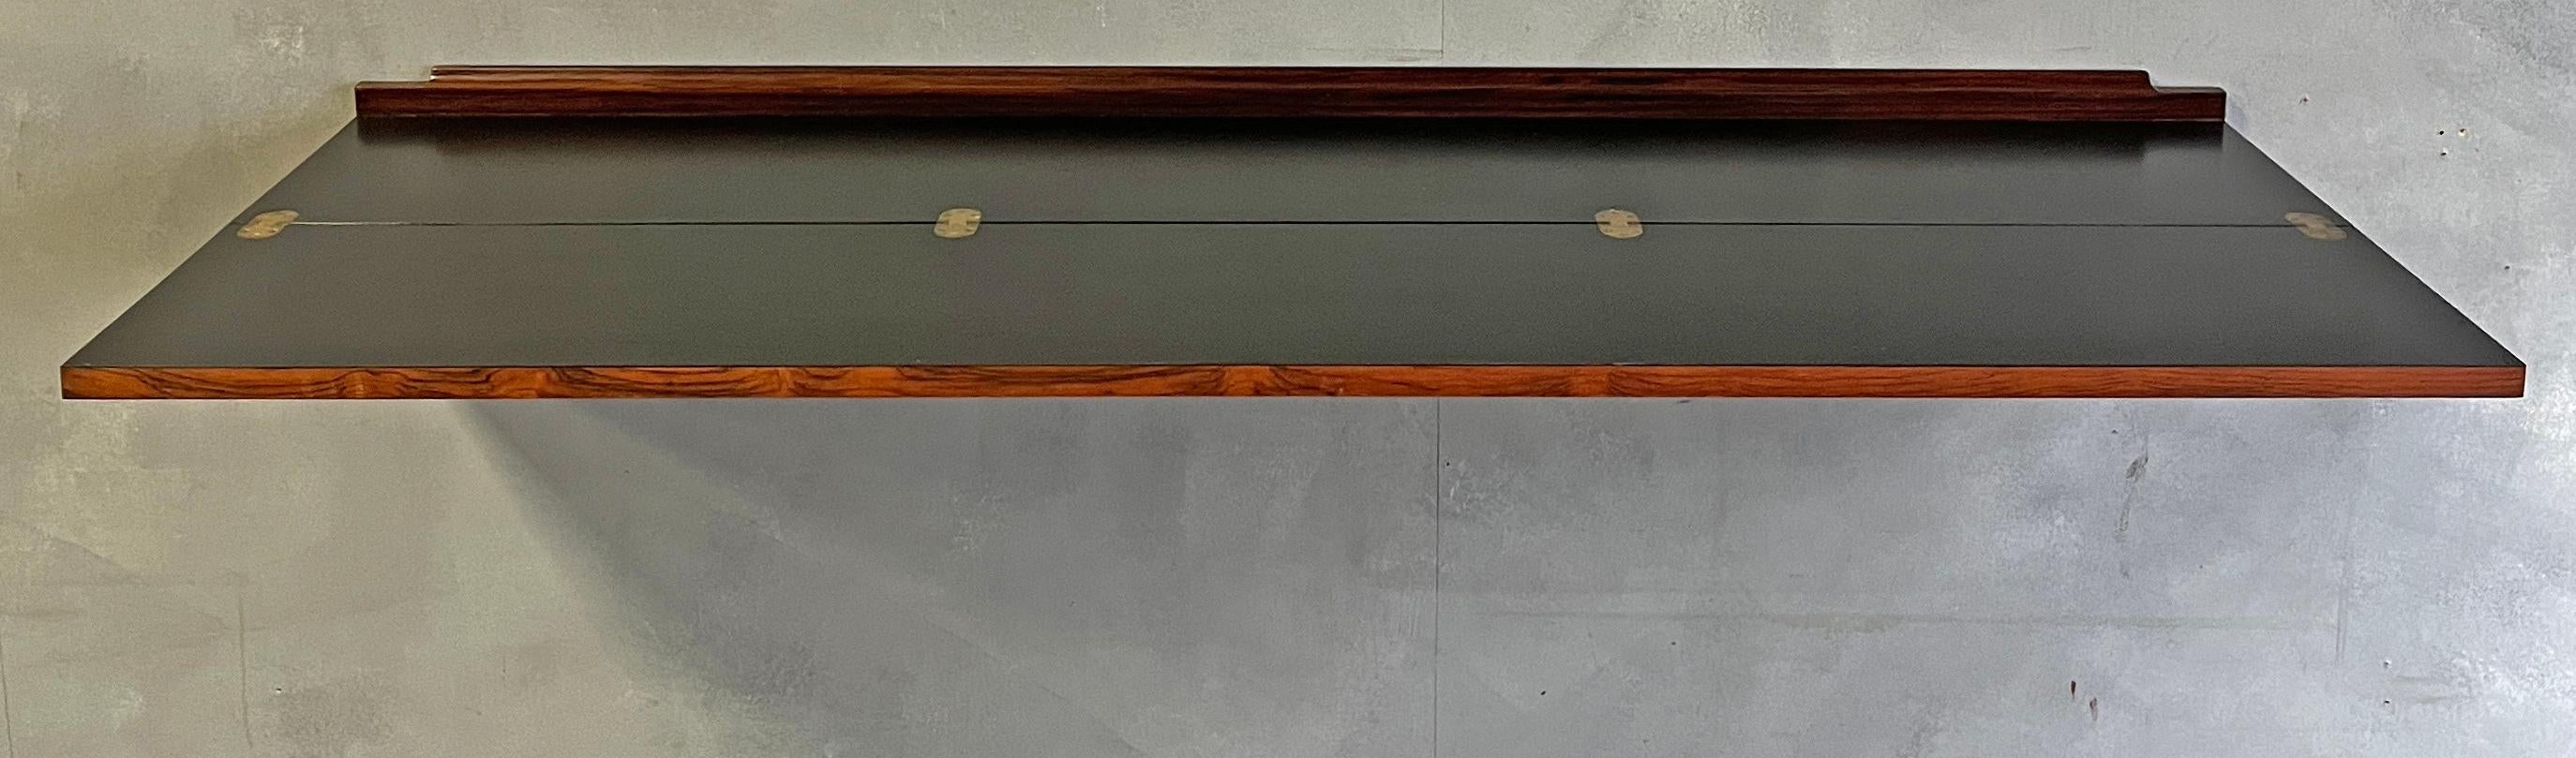 Brass Superb Midcentury Arne Hovmand-Olsen Wall Mounted Flip Top Table in Rosewood